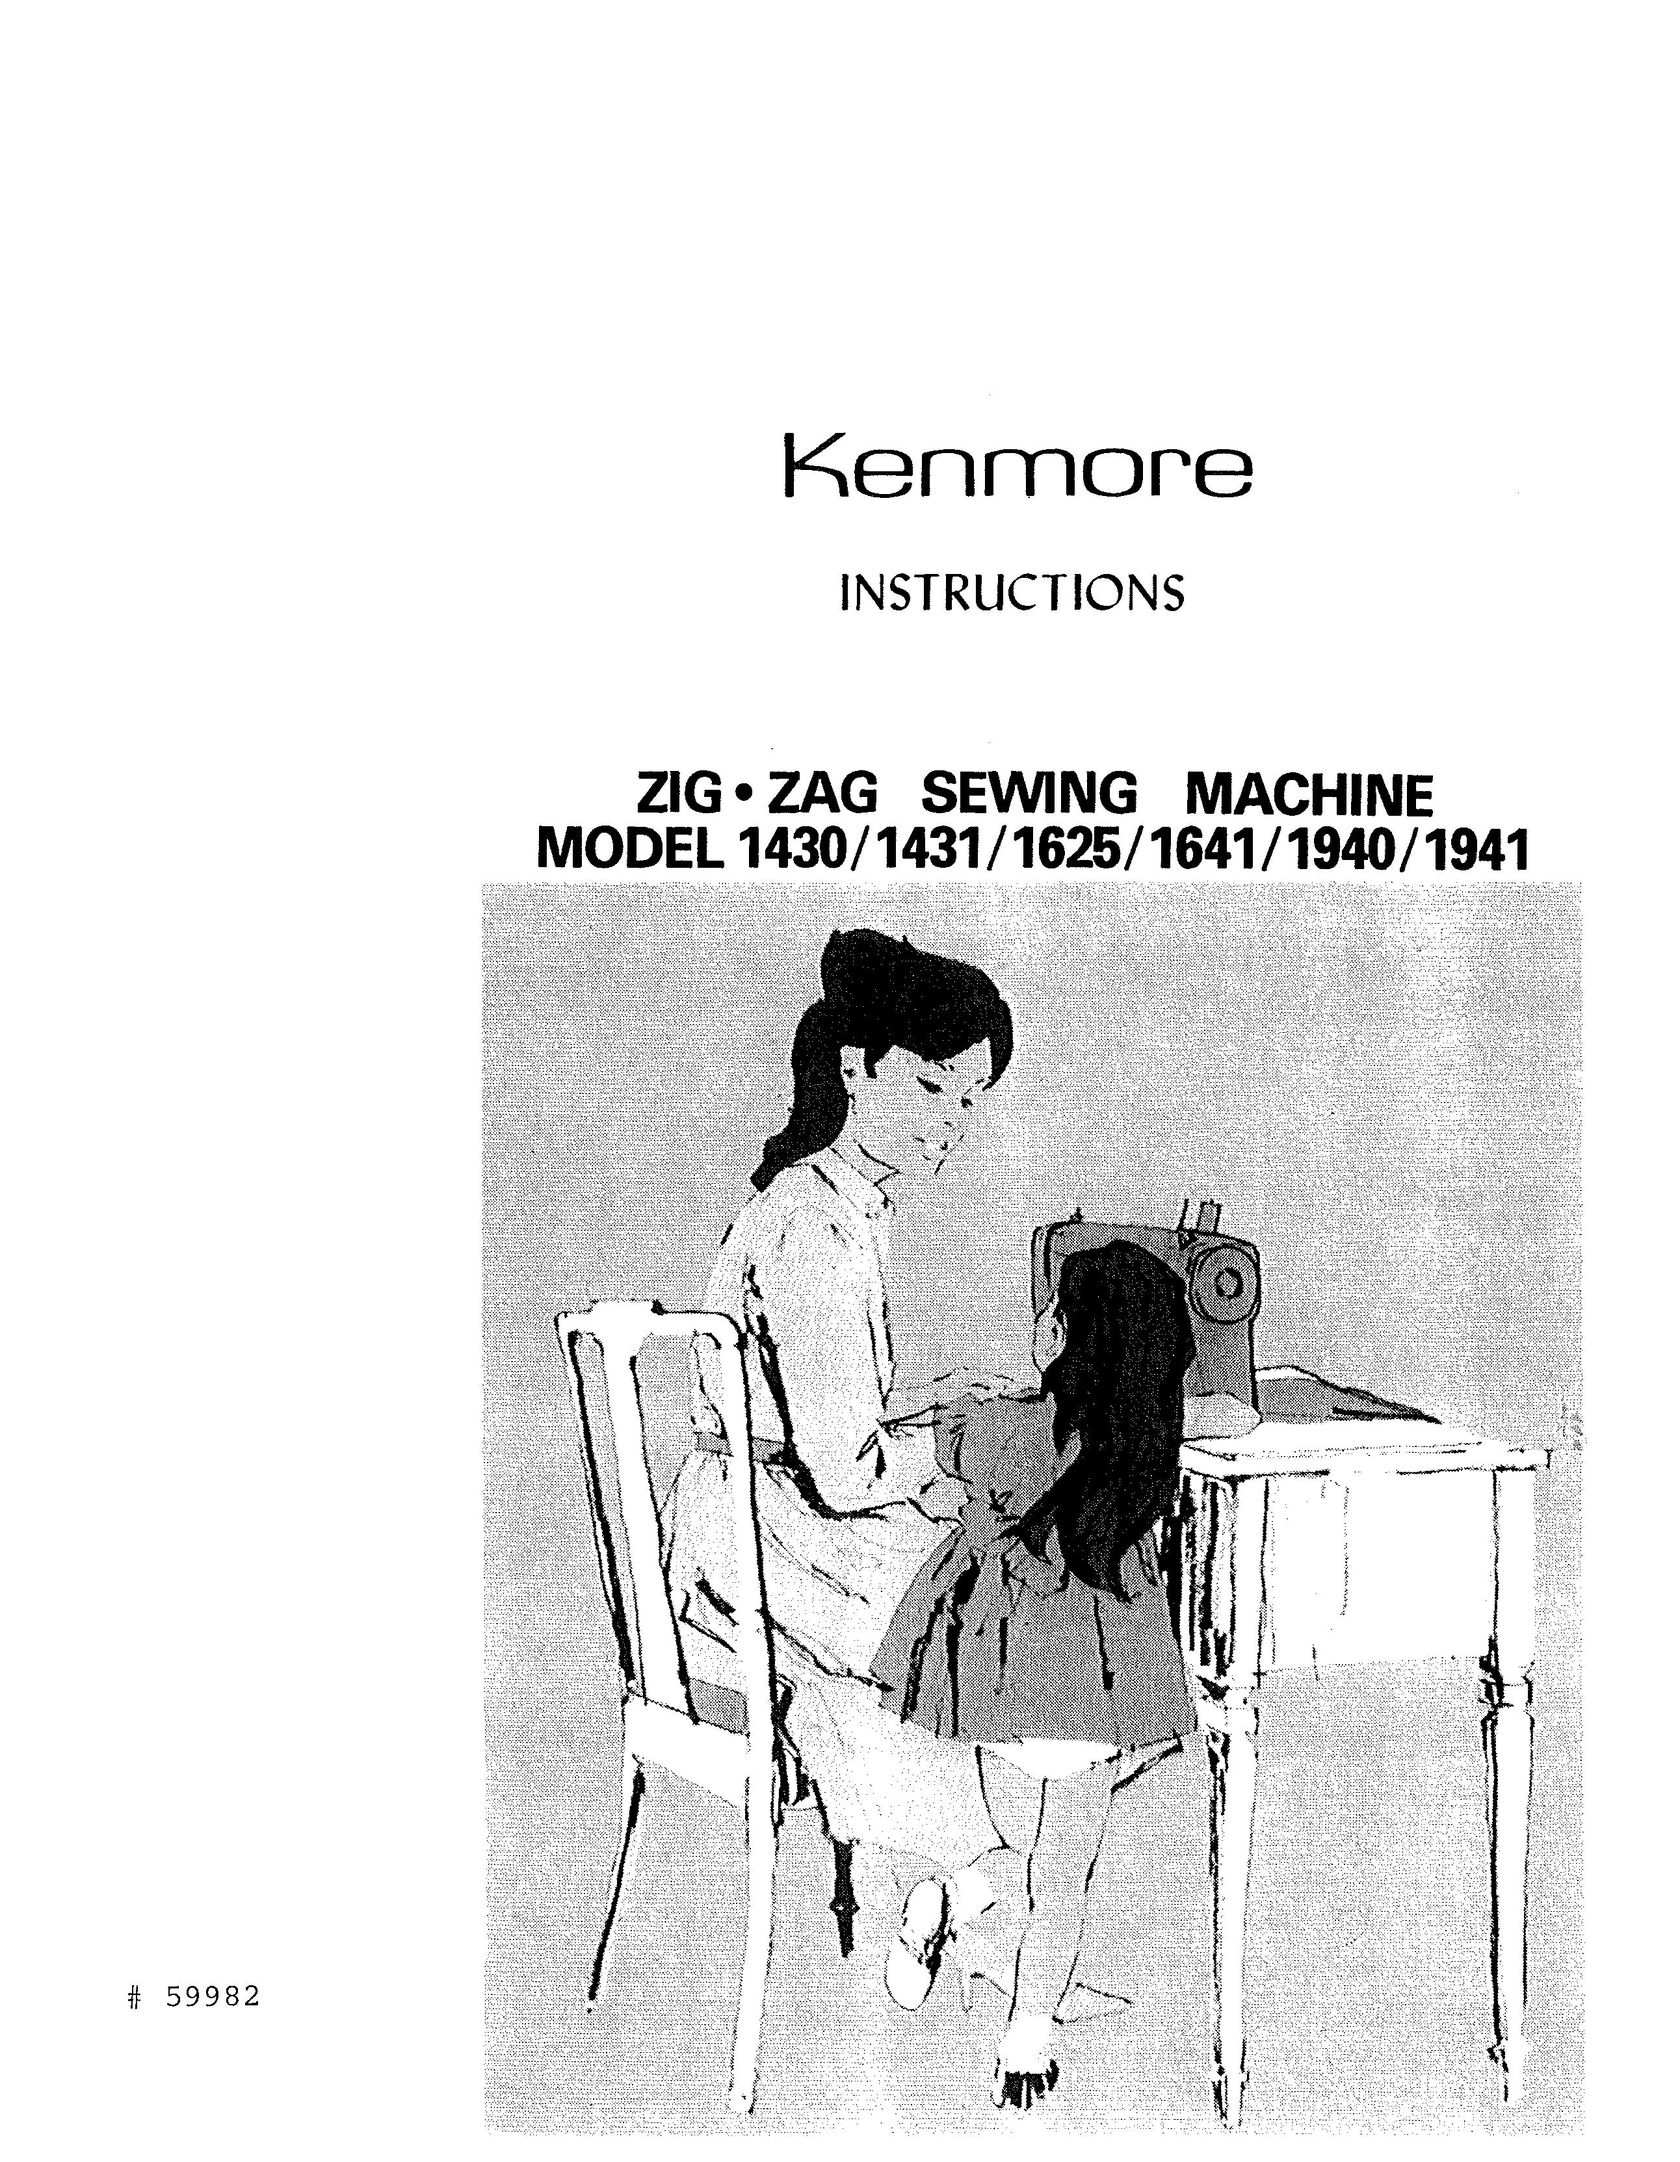 Kenmore 1941 Sewing Machine User Manual